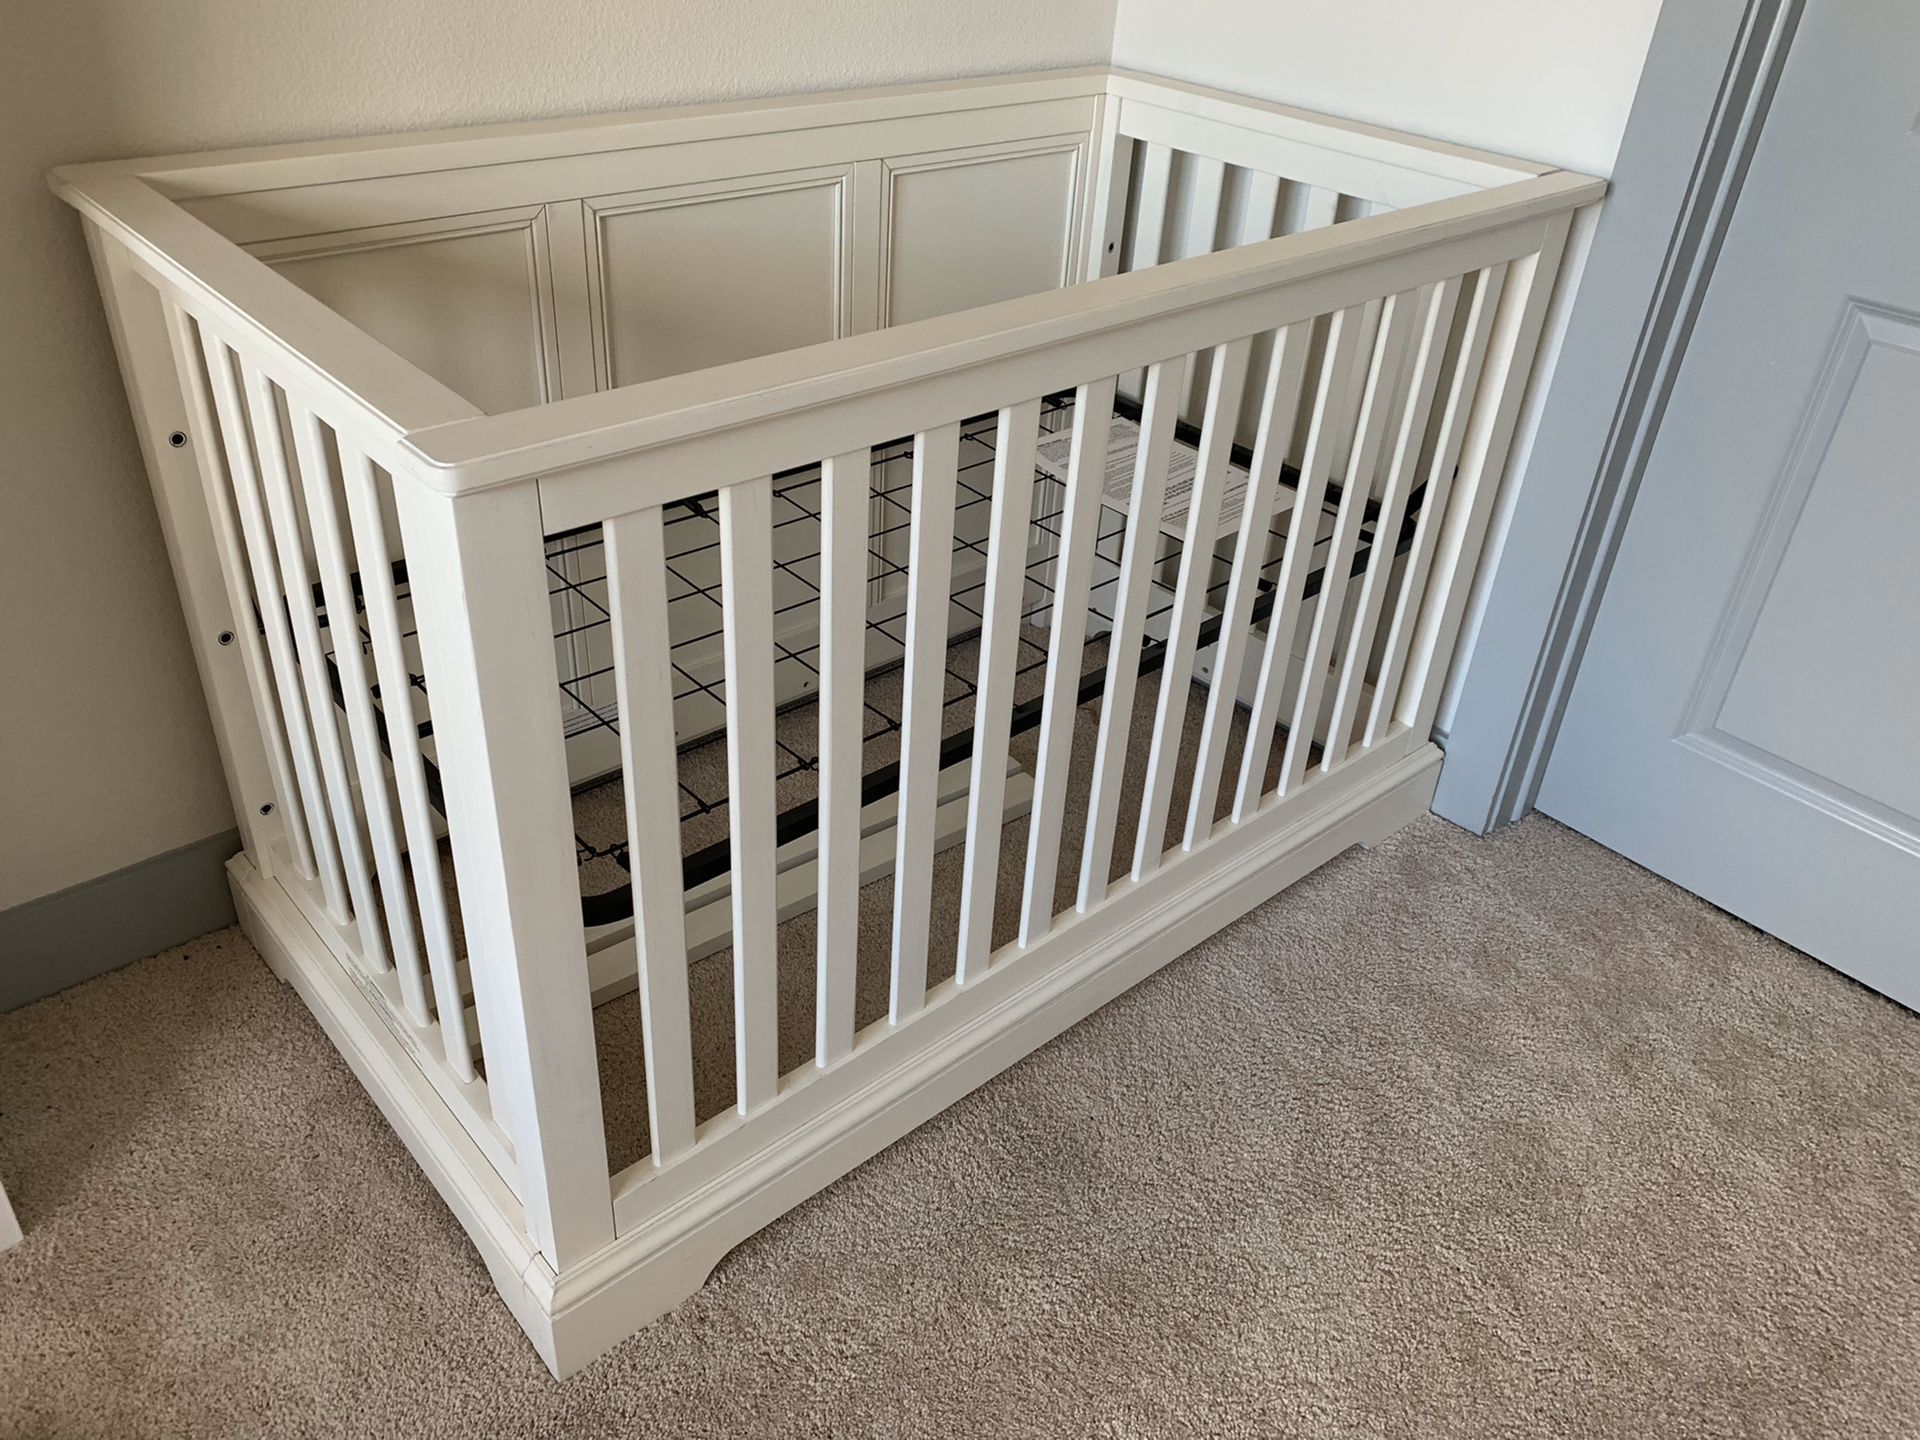 Buy Buy Baby Hanley Crib